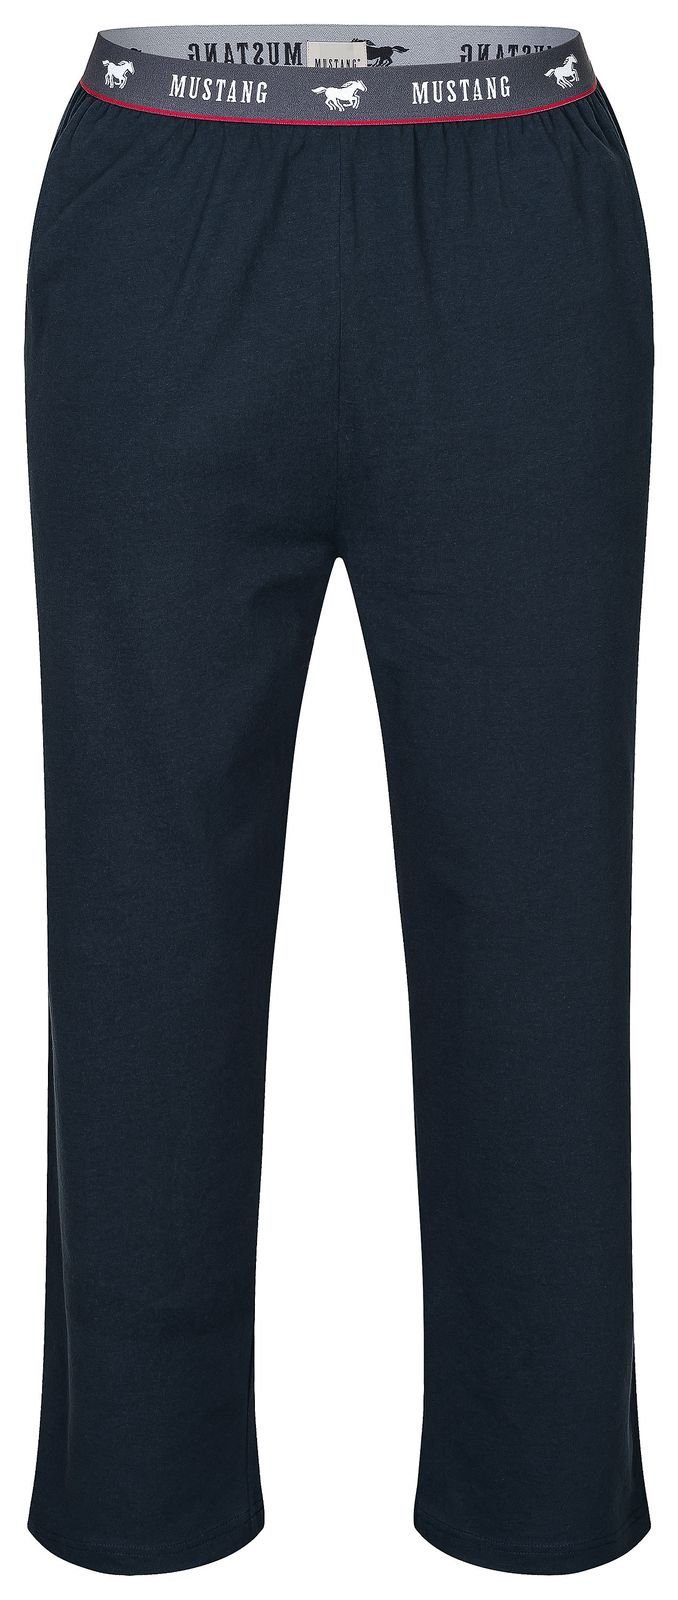 MUSTANG Loungepants Long Pants Hose roter Navy Freizeithose Trousers und Mustangbranding Lounge Kontraststreifen